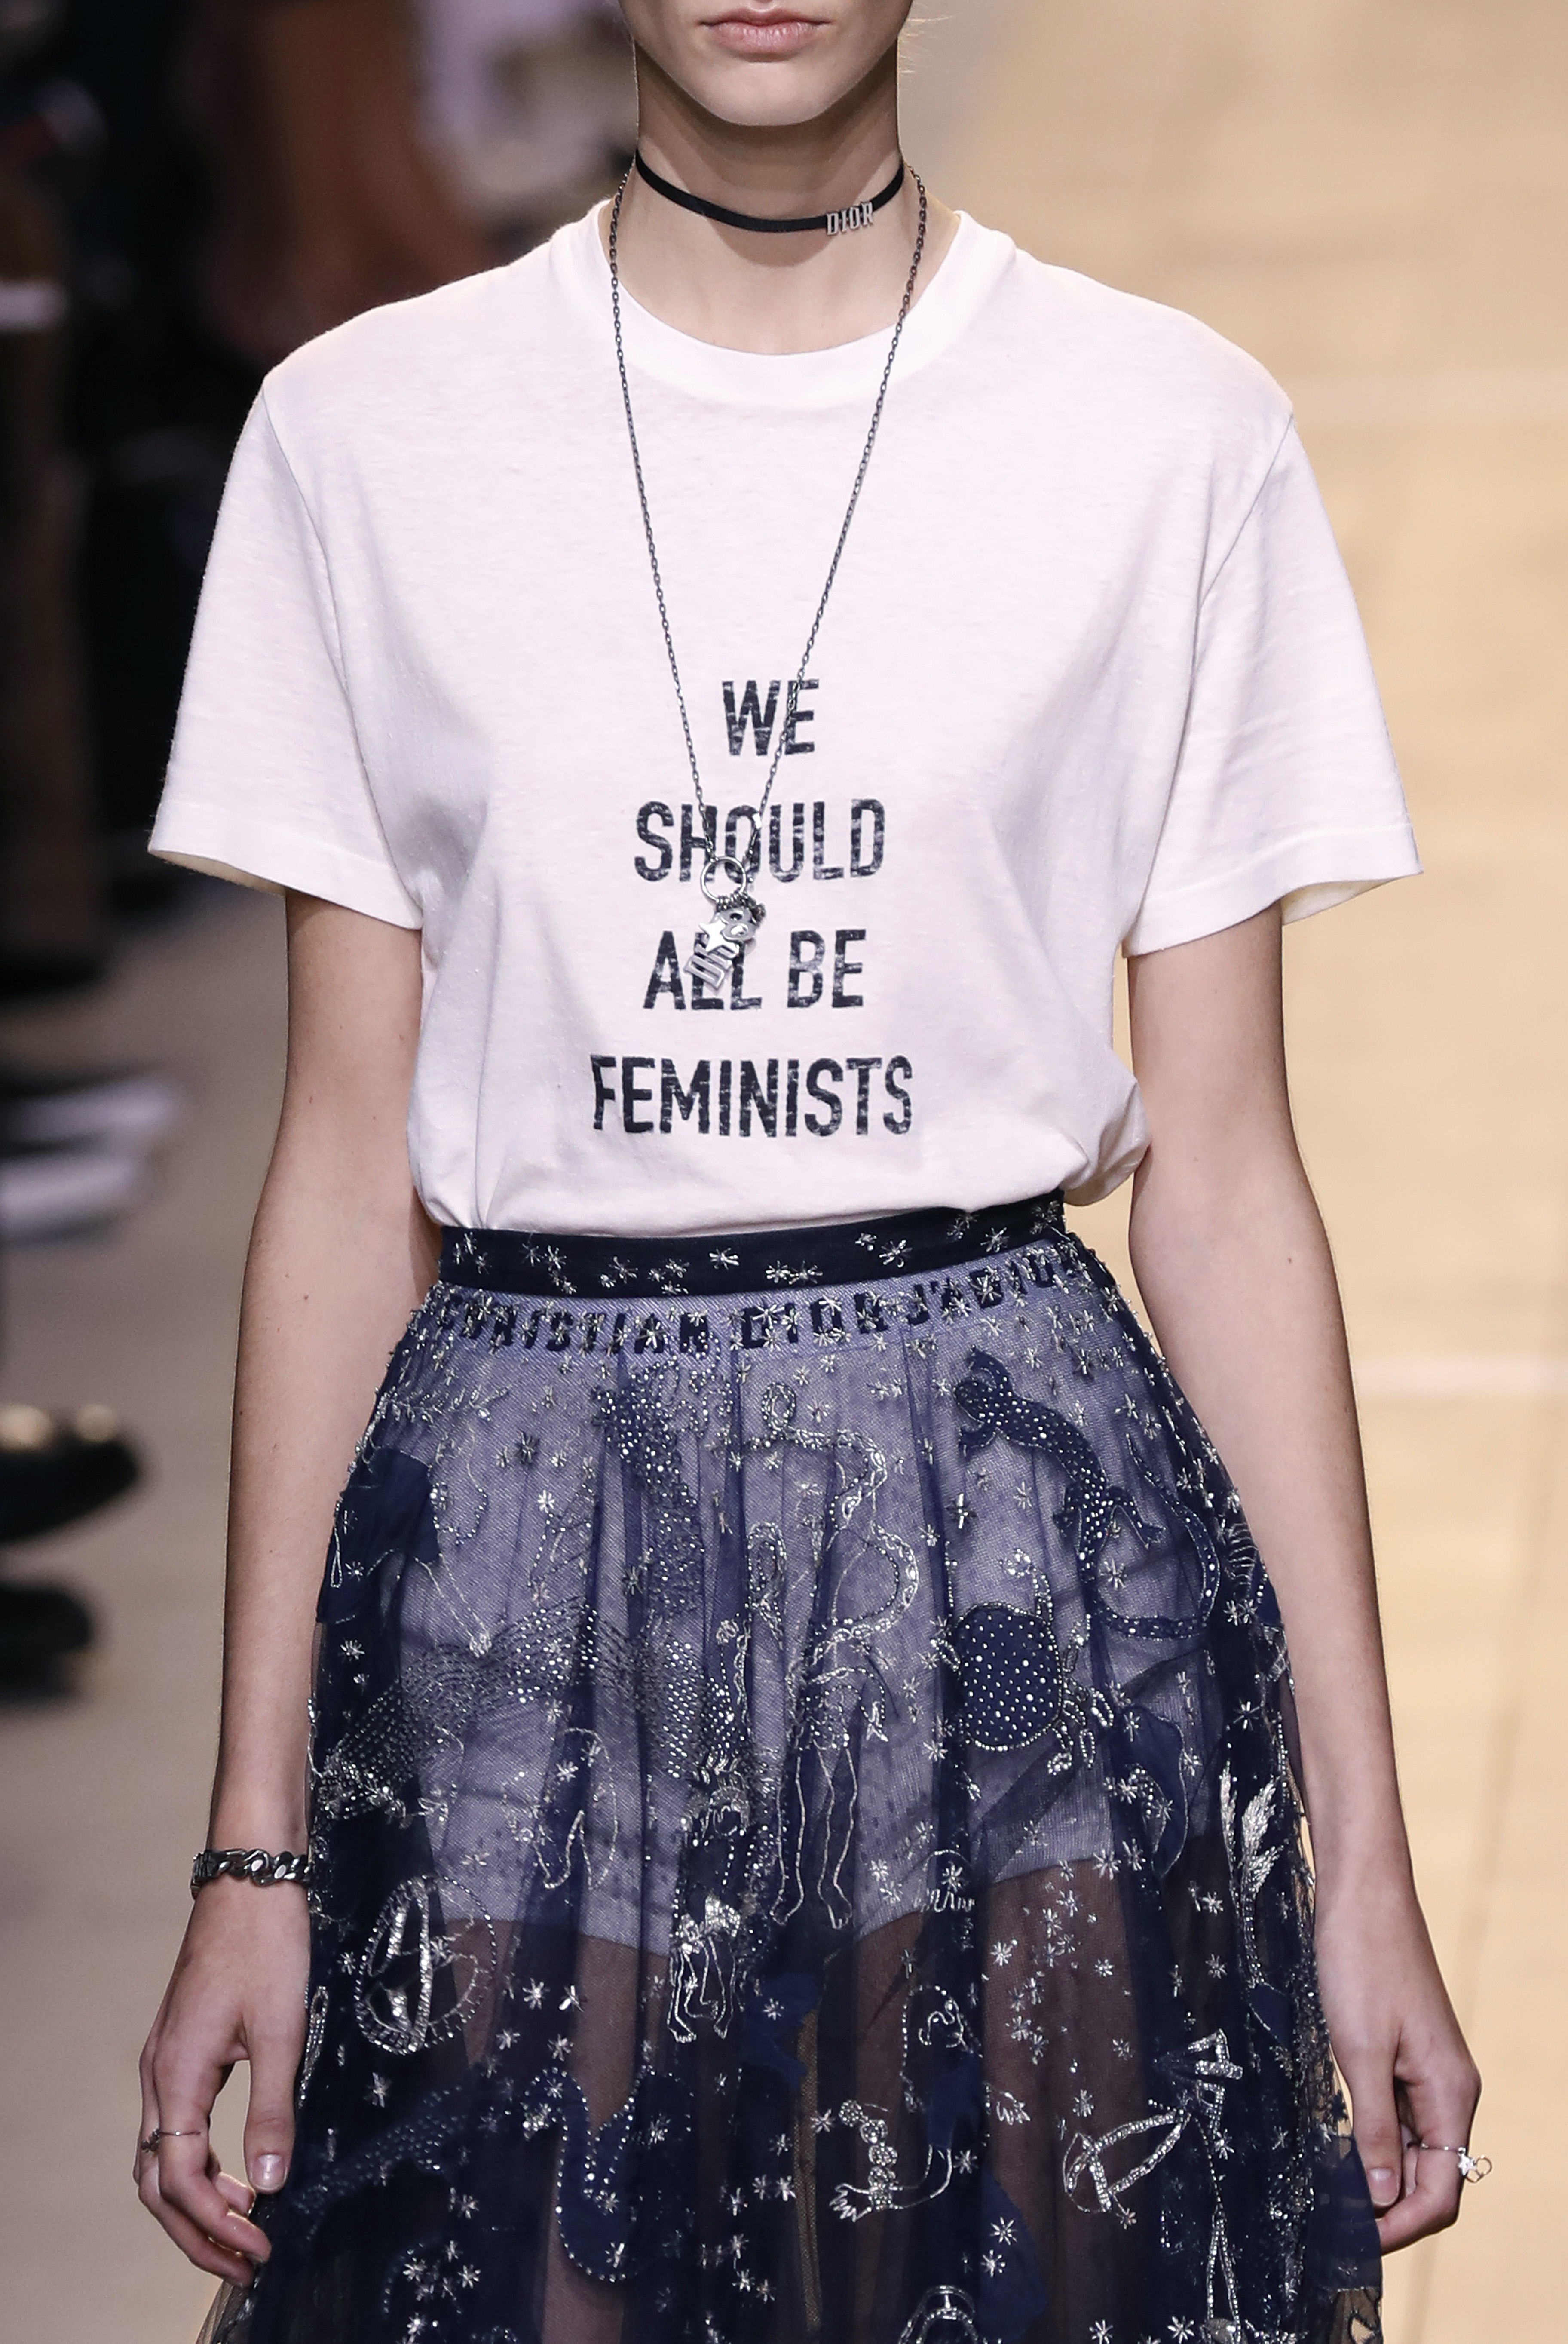 Feminist T-Shirt On The Runway 